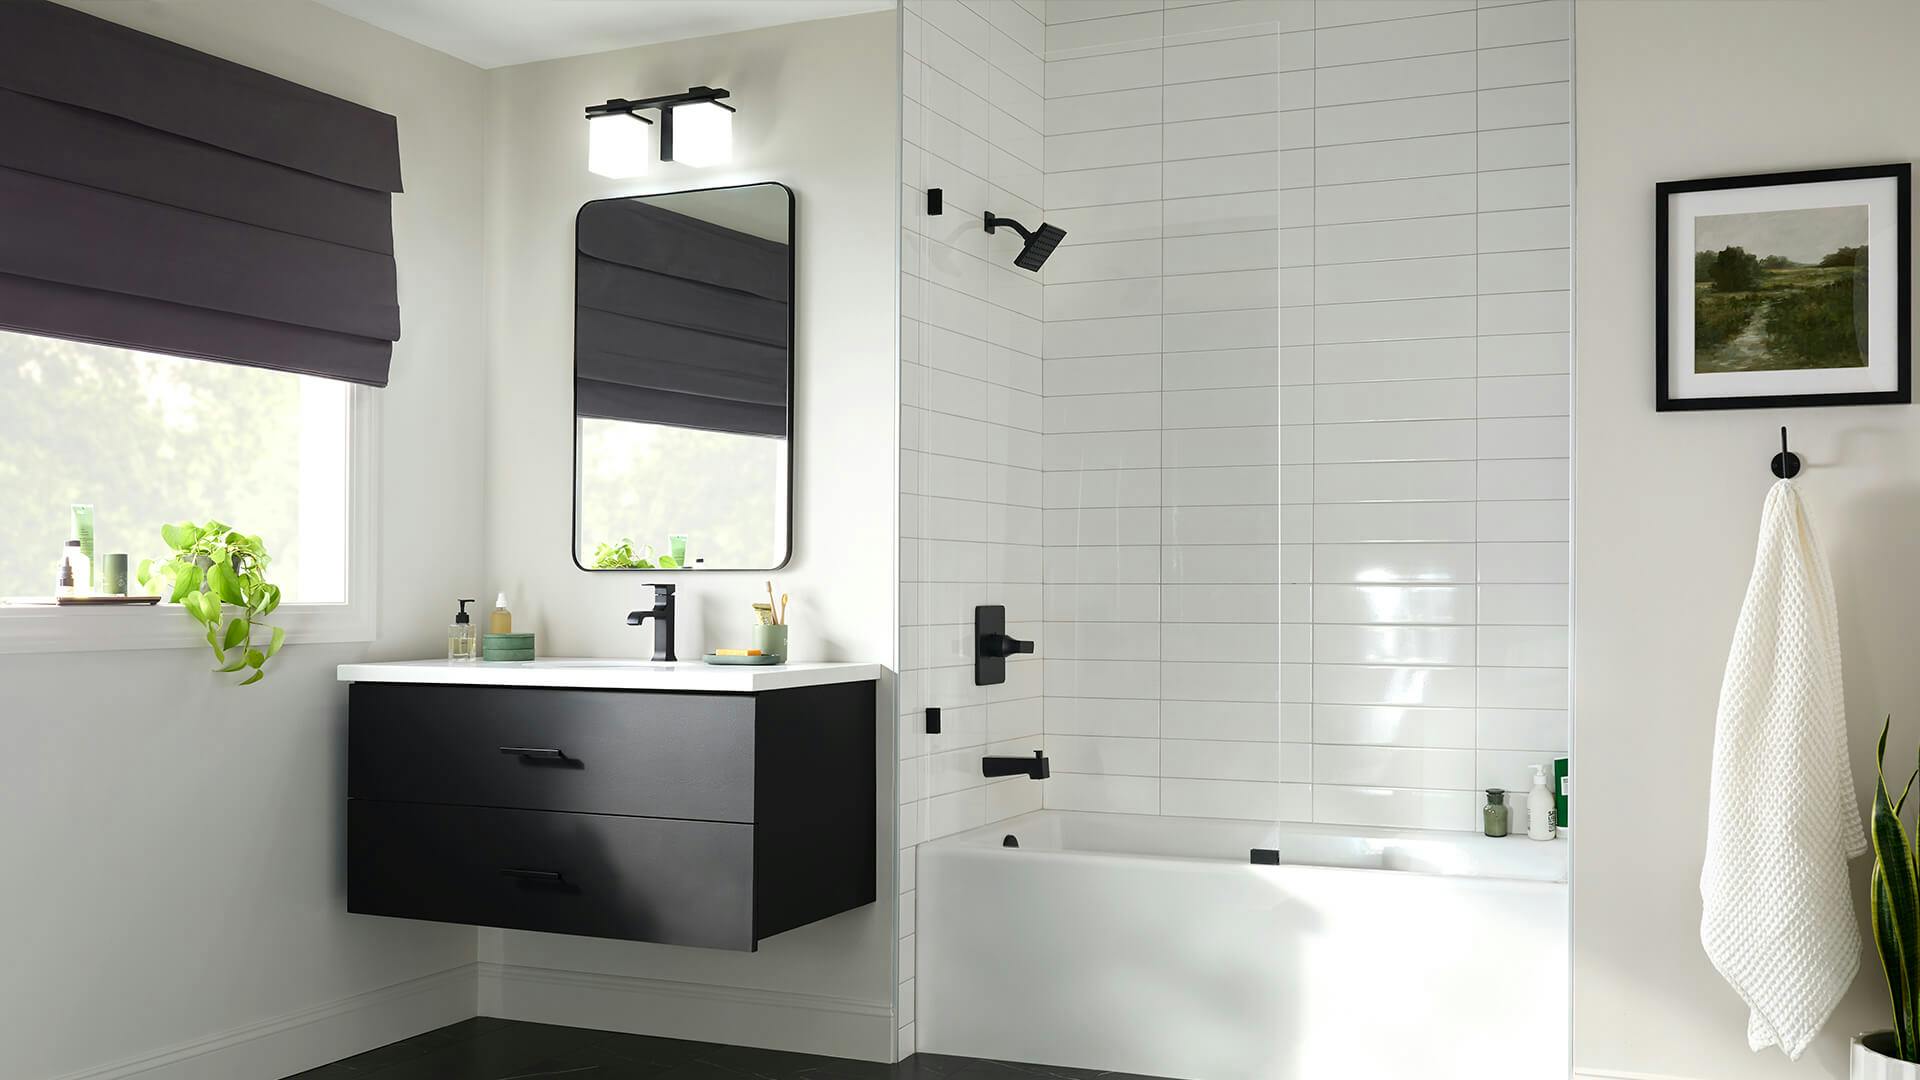 White tiled bathroom with Tully 2-light vanity light above the floating black vanity